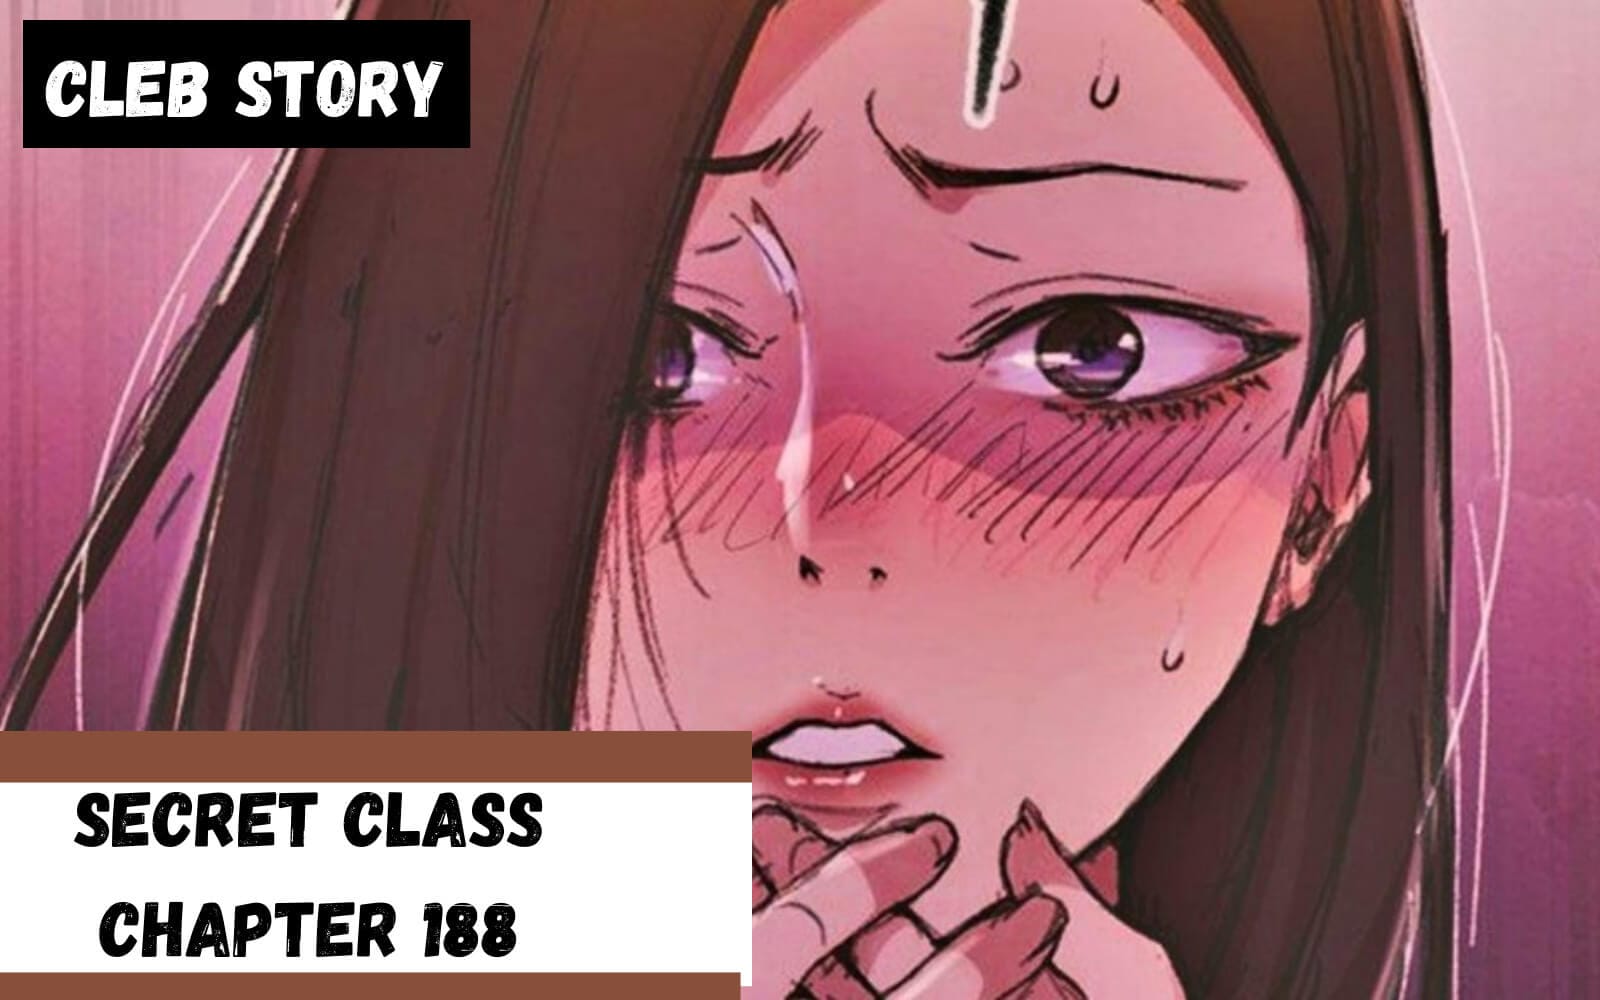 Secret Class Chapter 188 release date